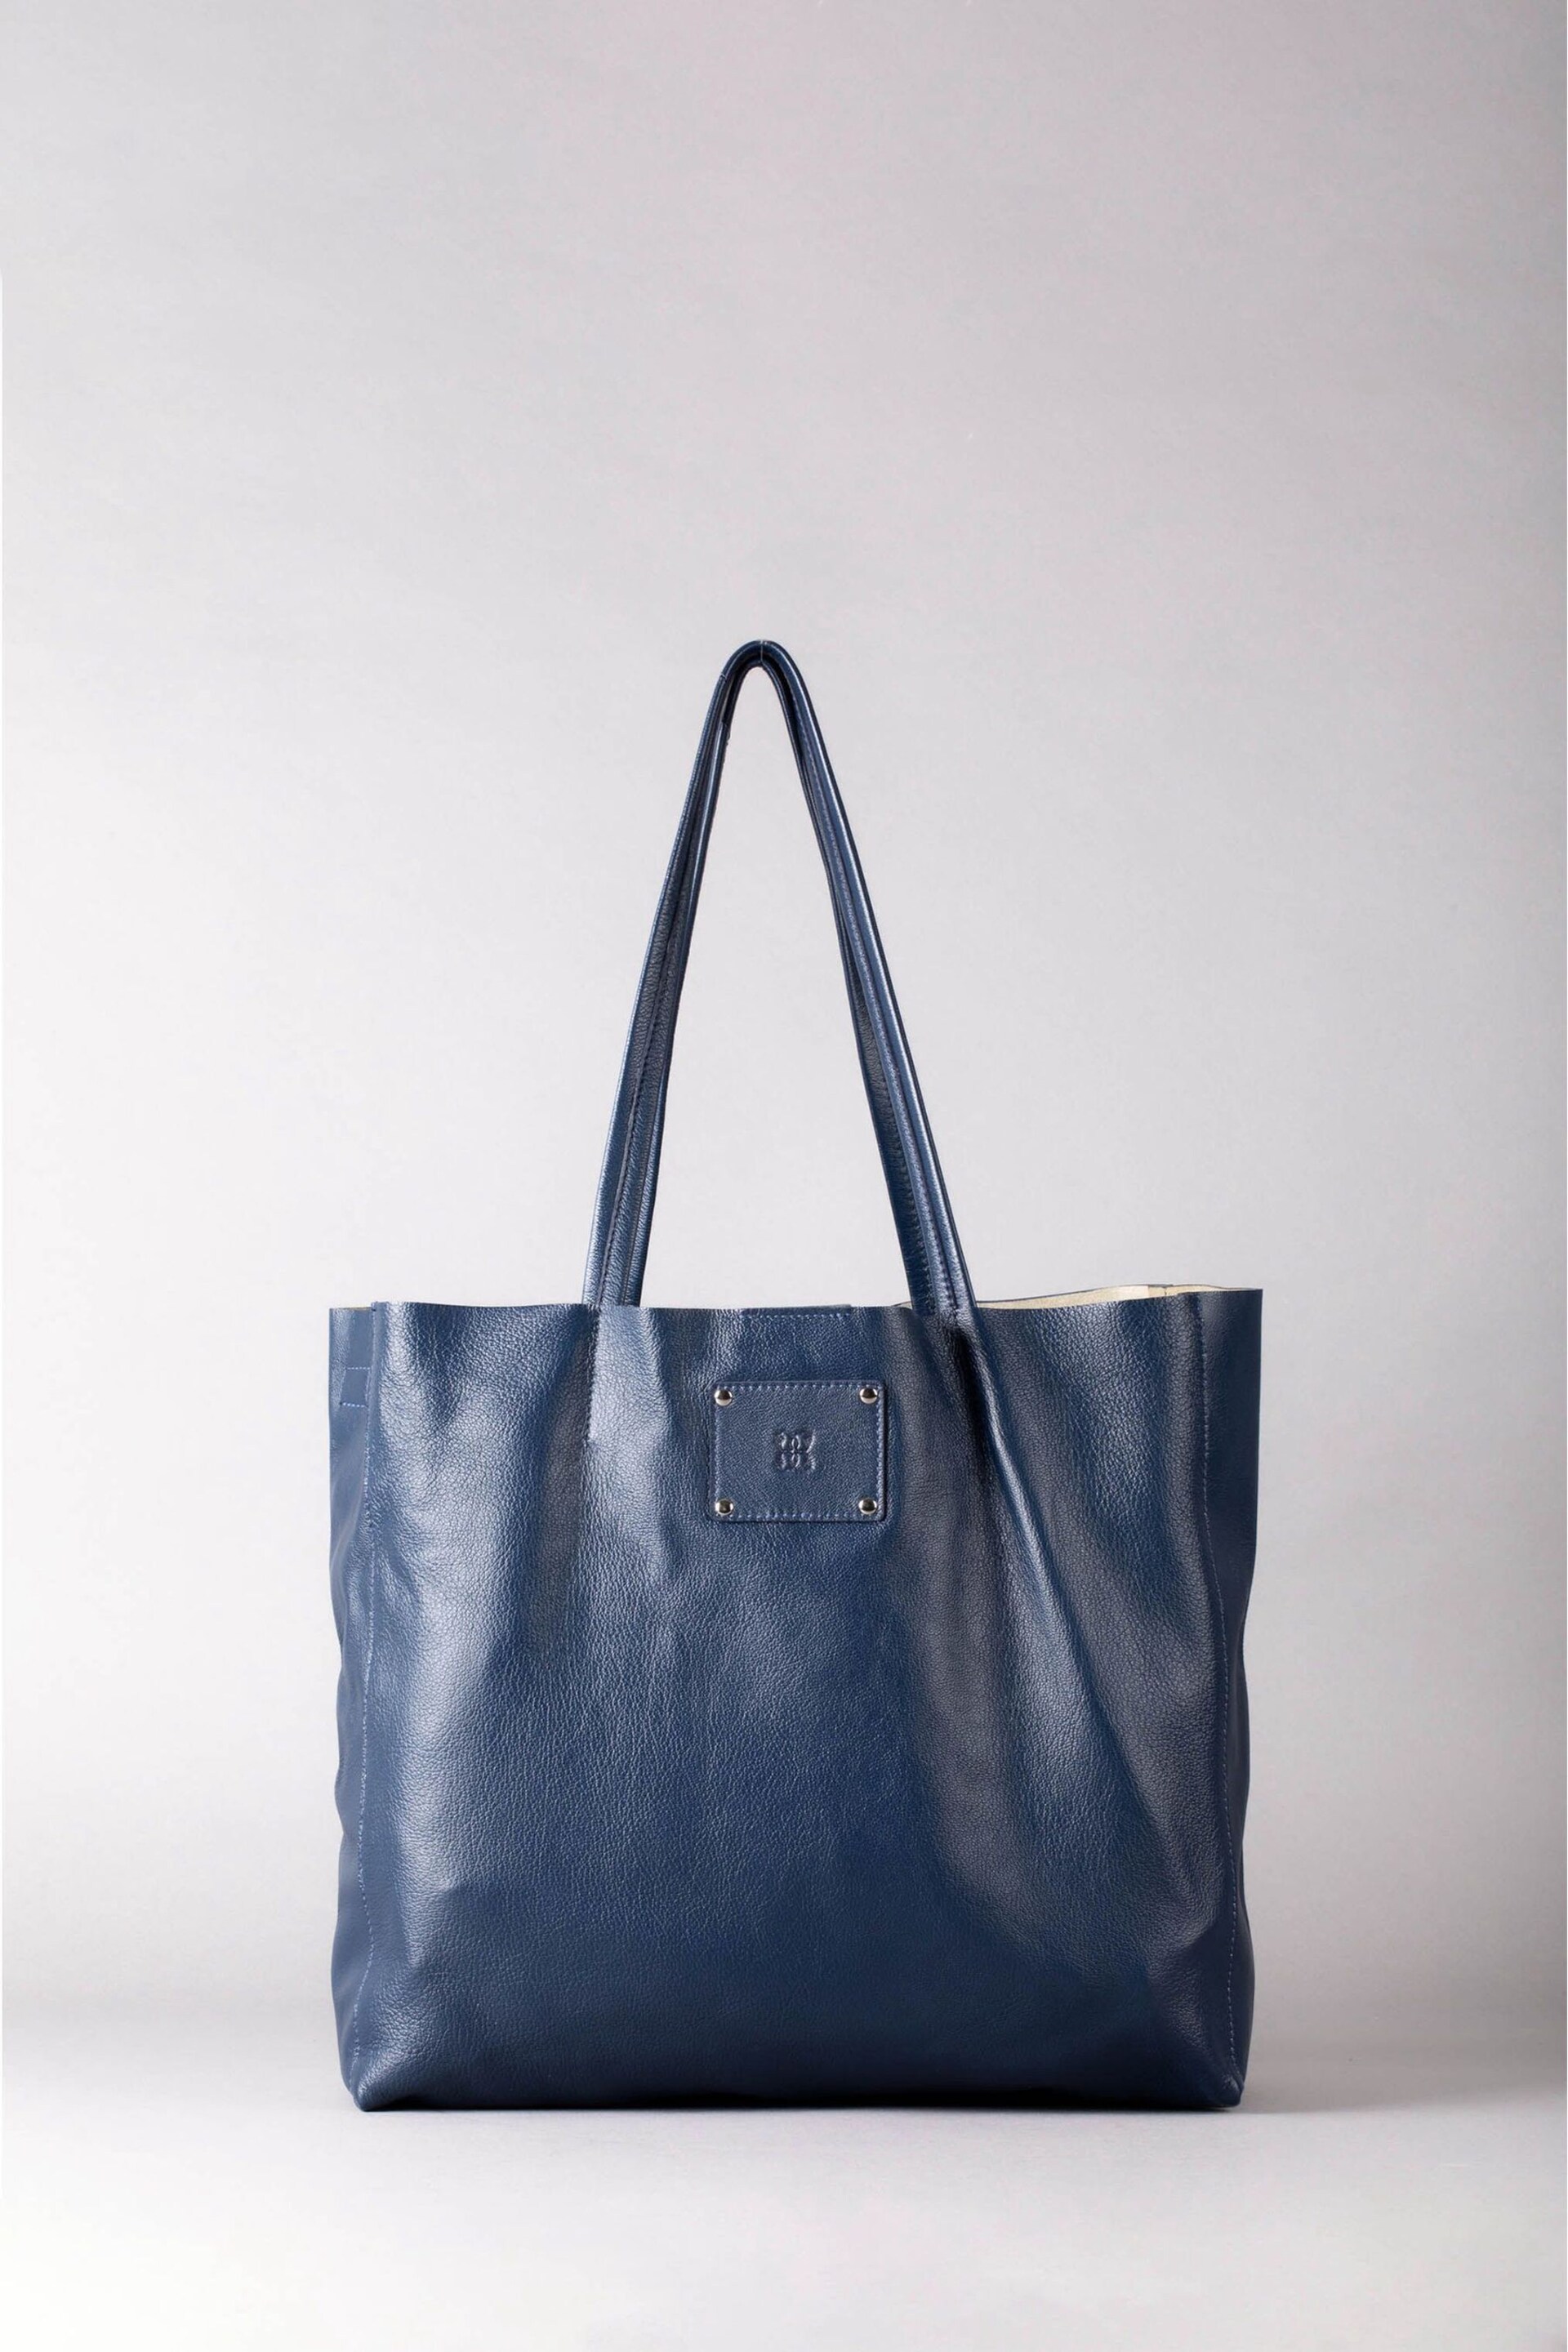 Lakeland Leather Blue Tarn Leather Bucket Bag - Image 1 of 8